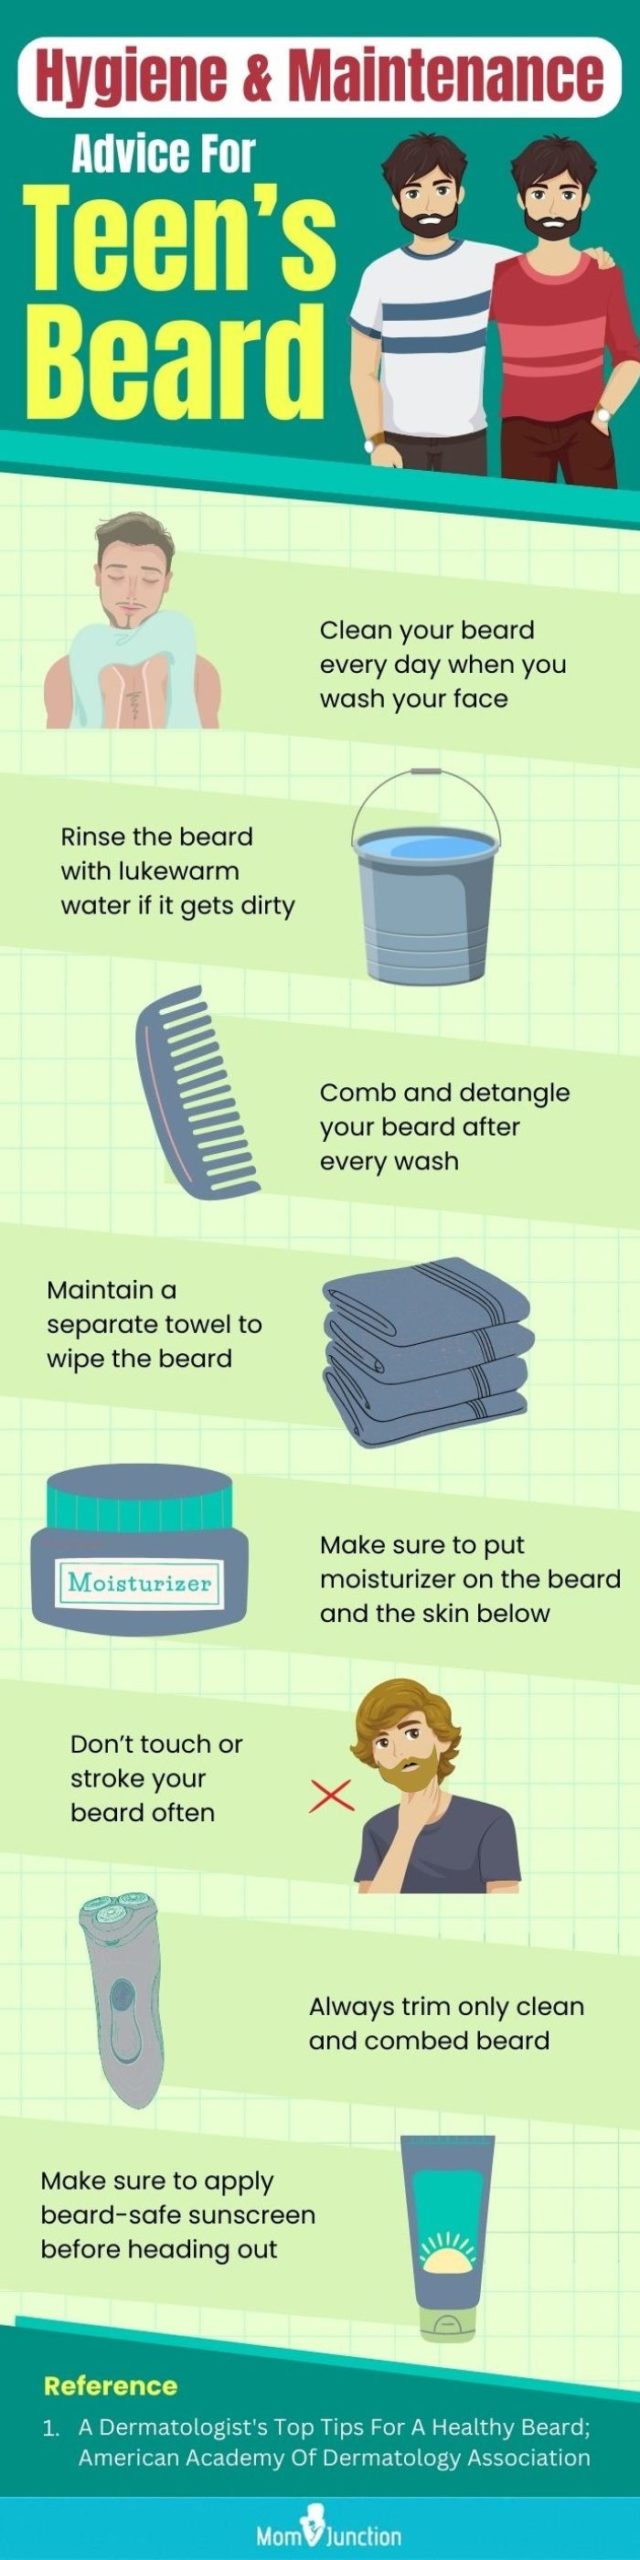 hygiene and maintenance advice for teens beard (infographic)